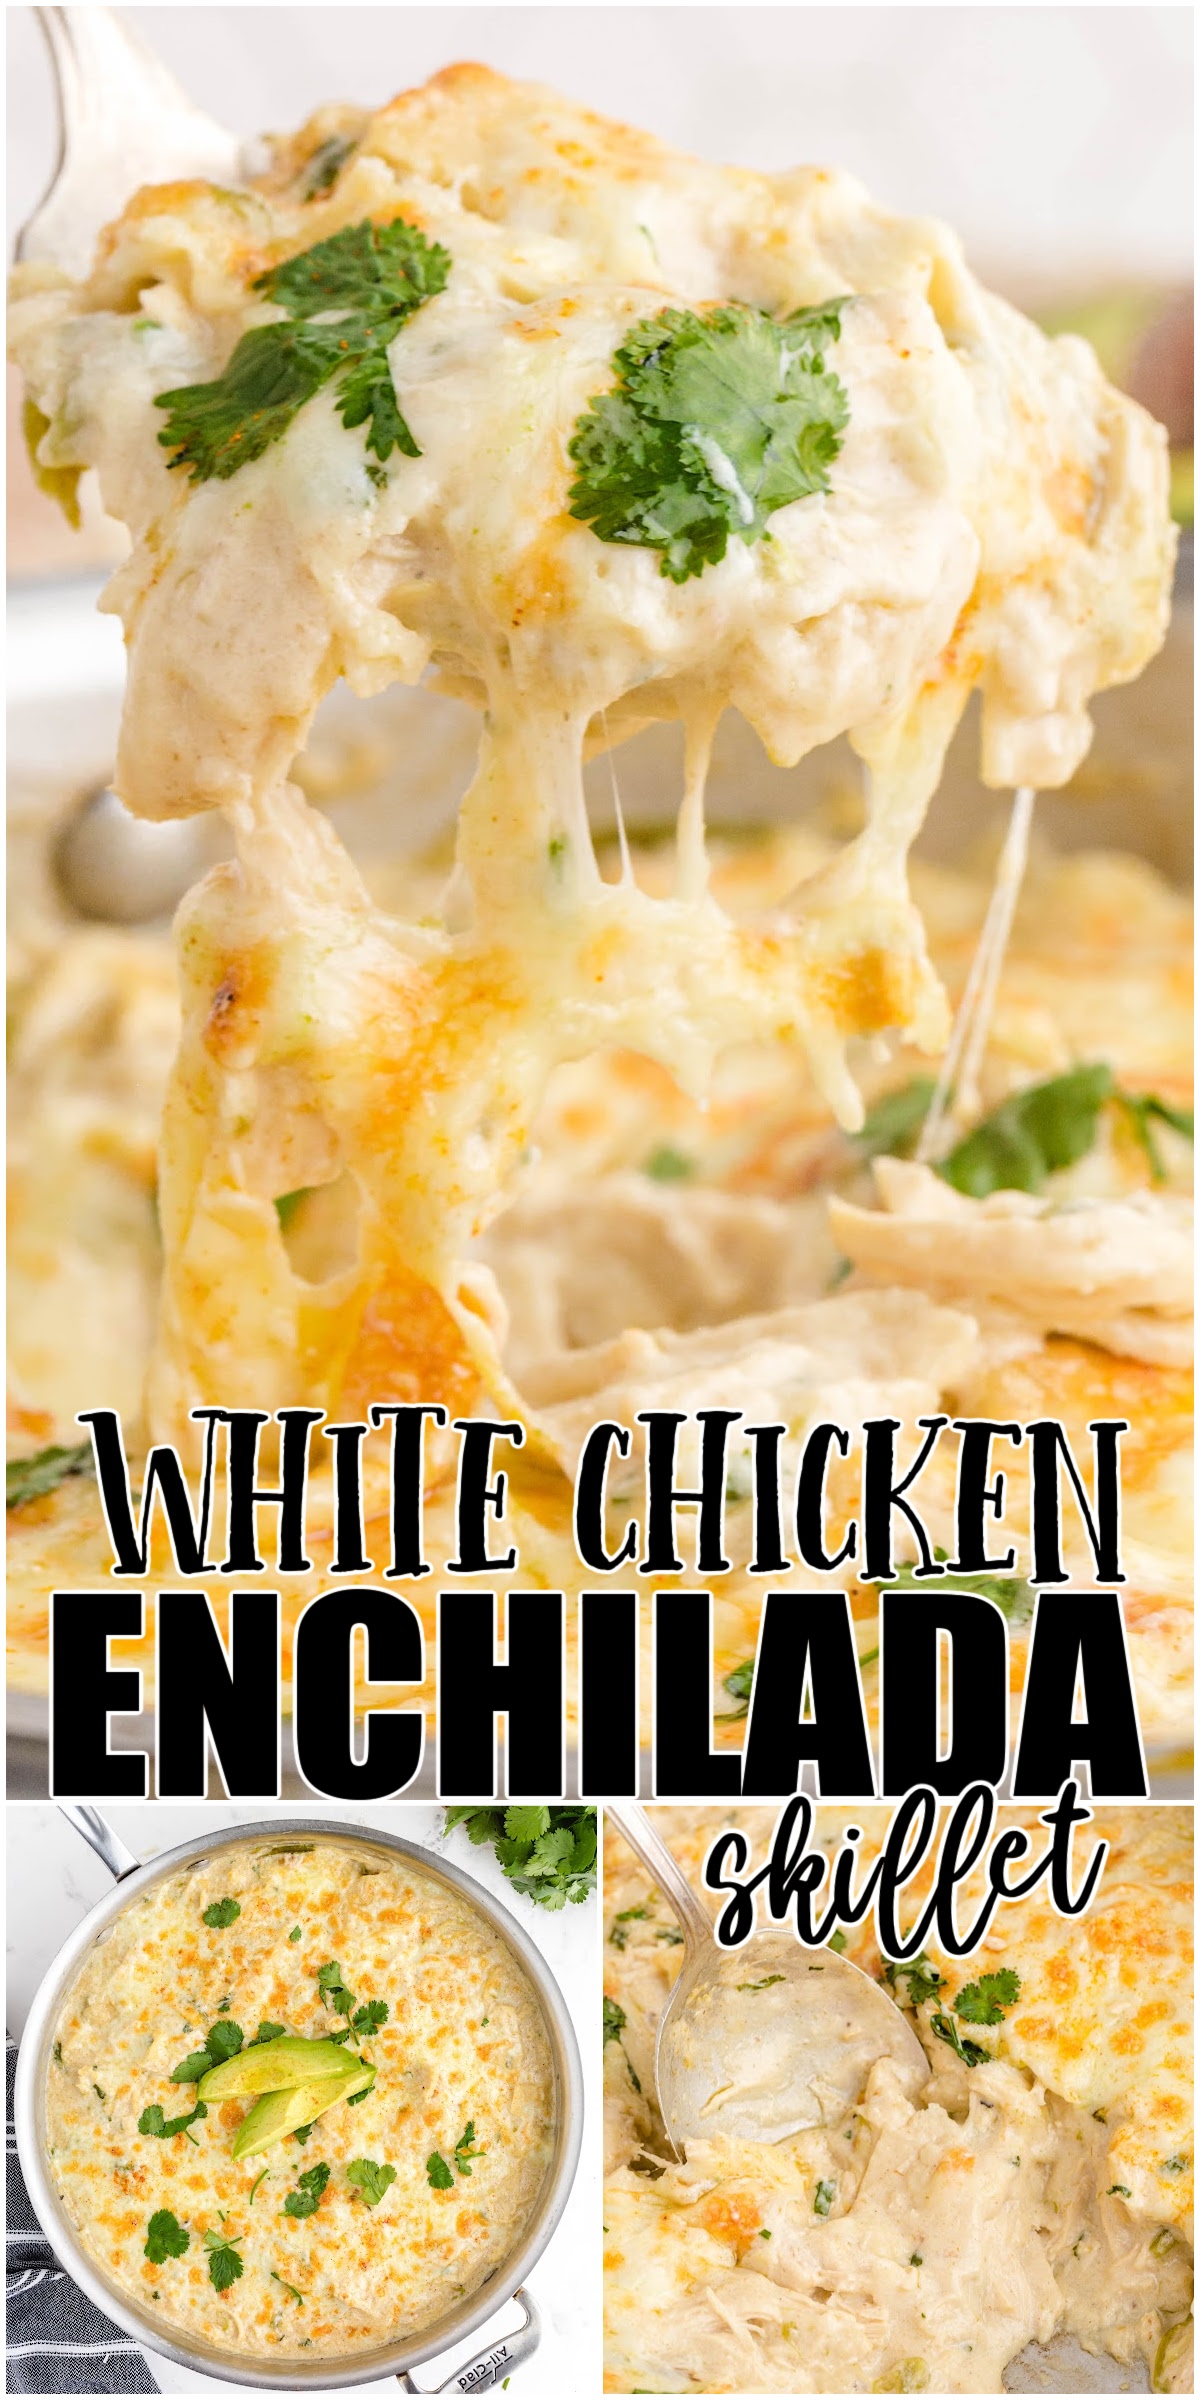 White Chicken Enchilada Skillet - The Best Blog Recipes